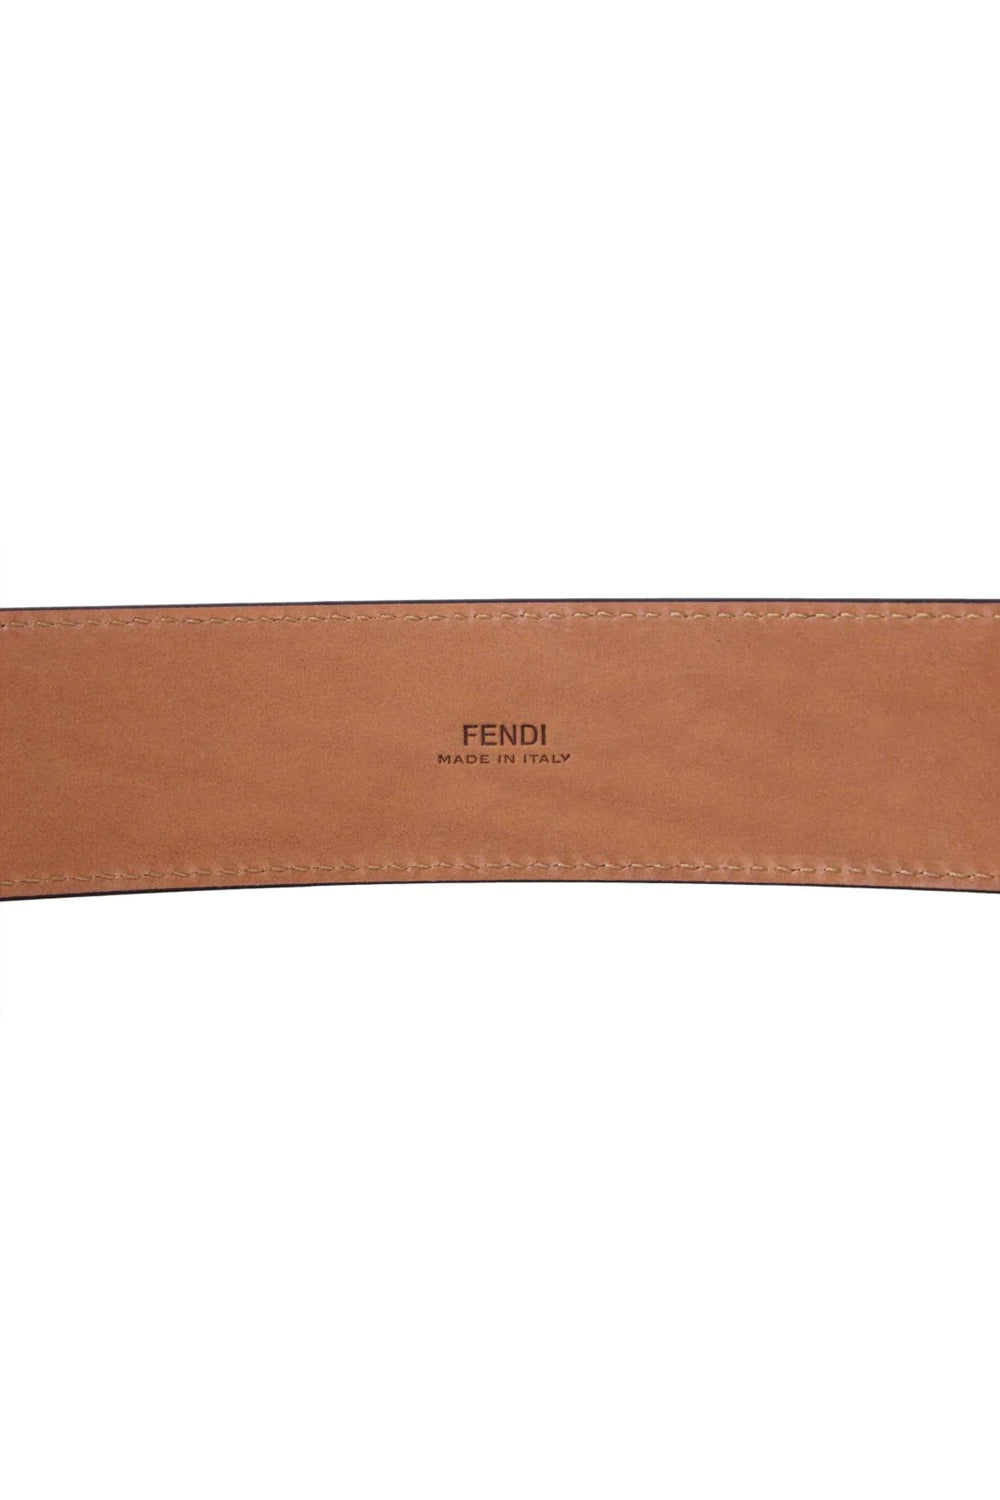 Fendi Reversible Leather Perforated Belt - Black